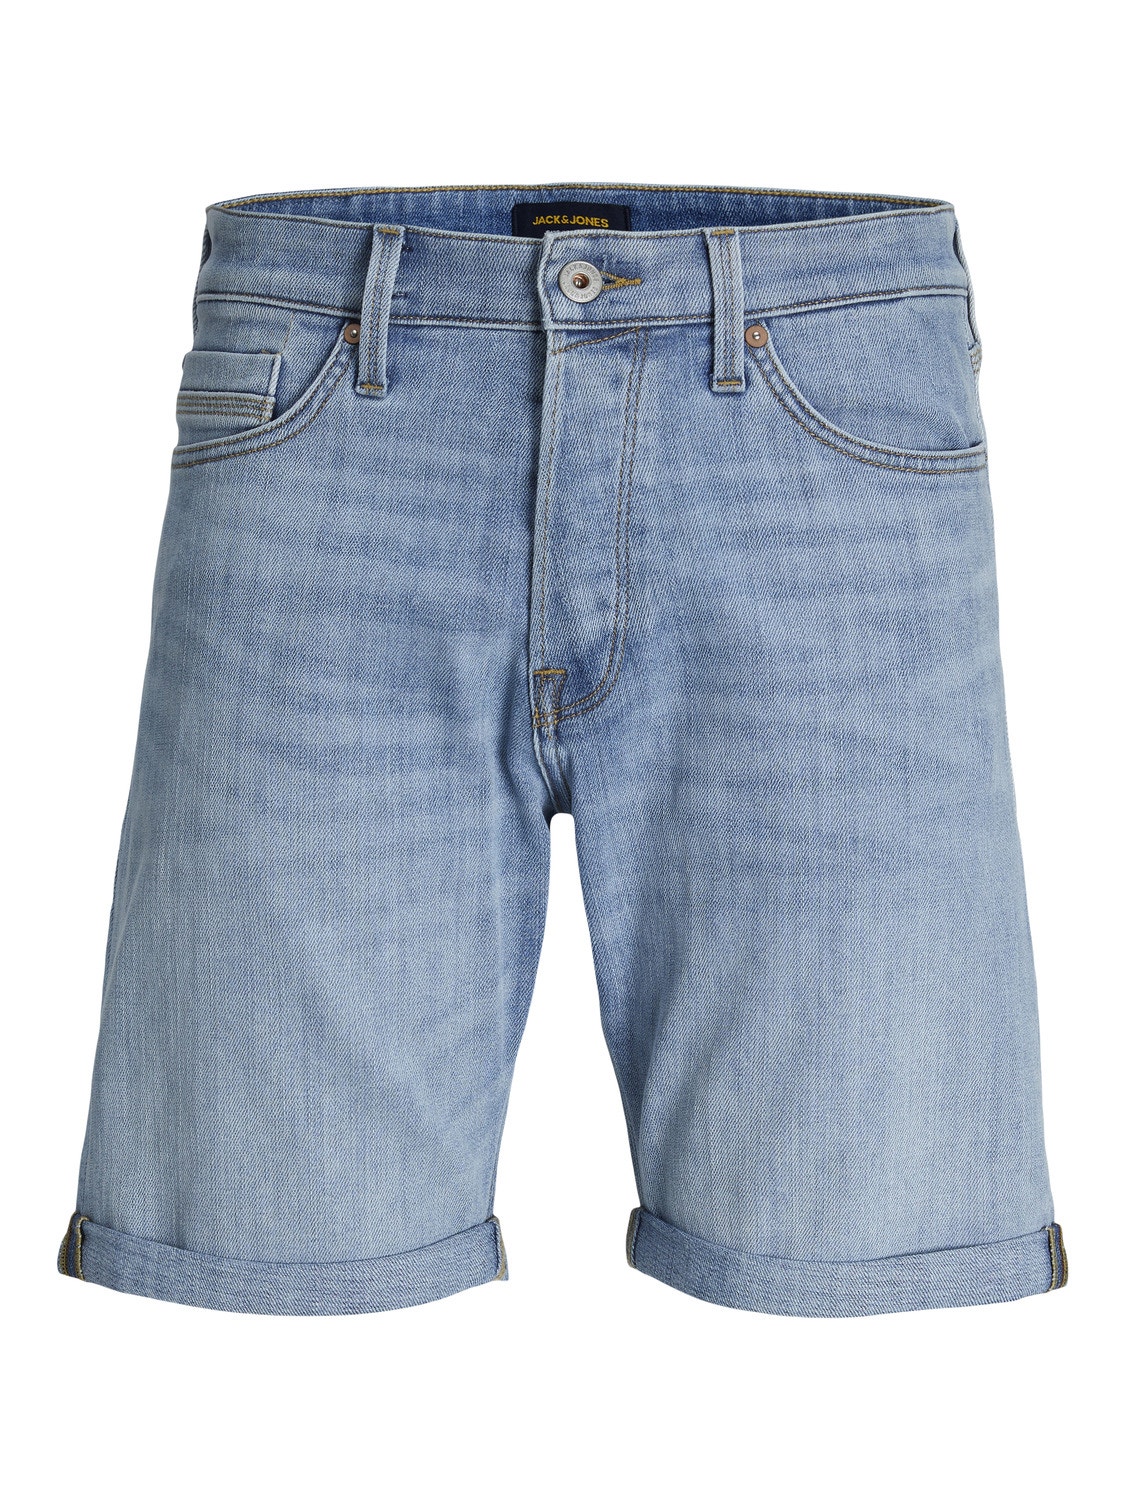 Jack & Jones Relaxed Fit Jeans Shorts -Blue Denim - 12249095